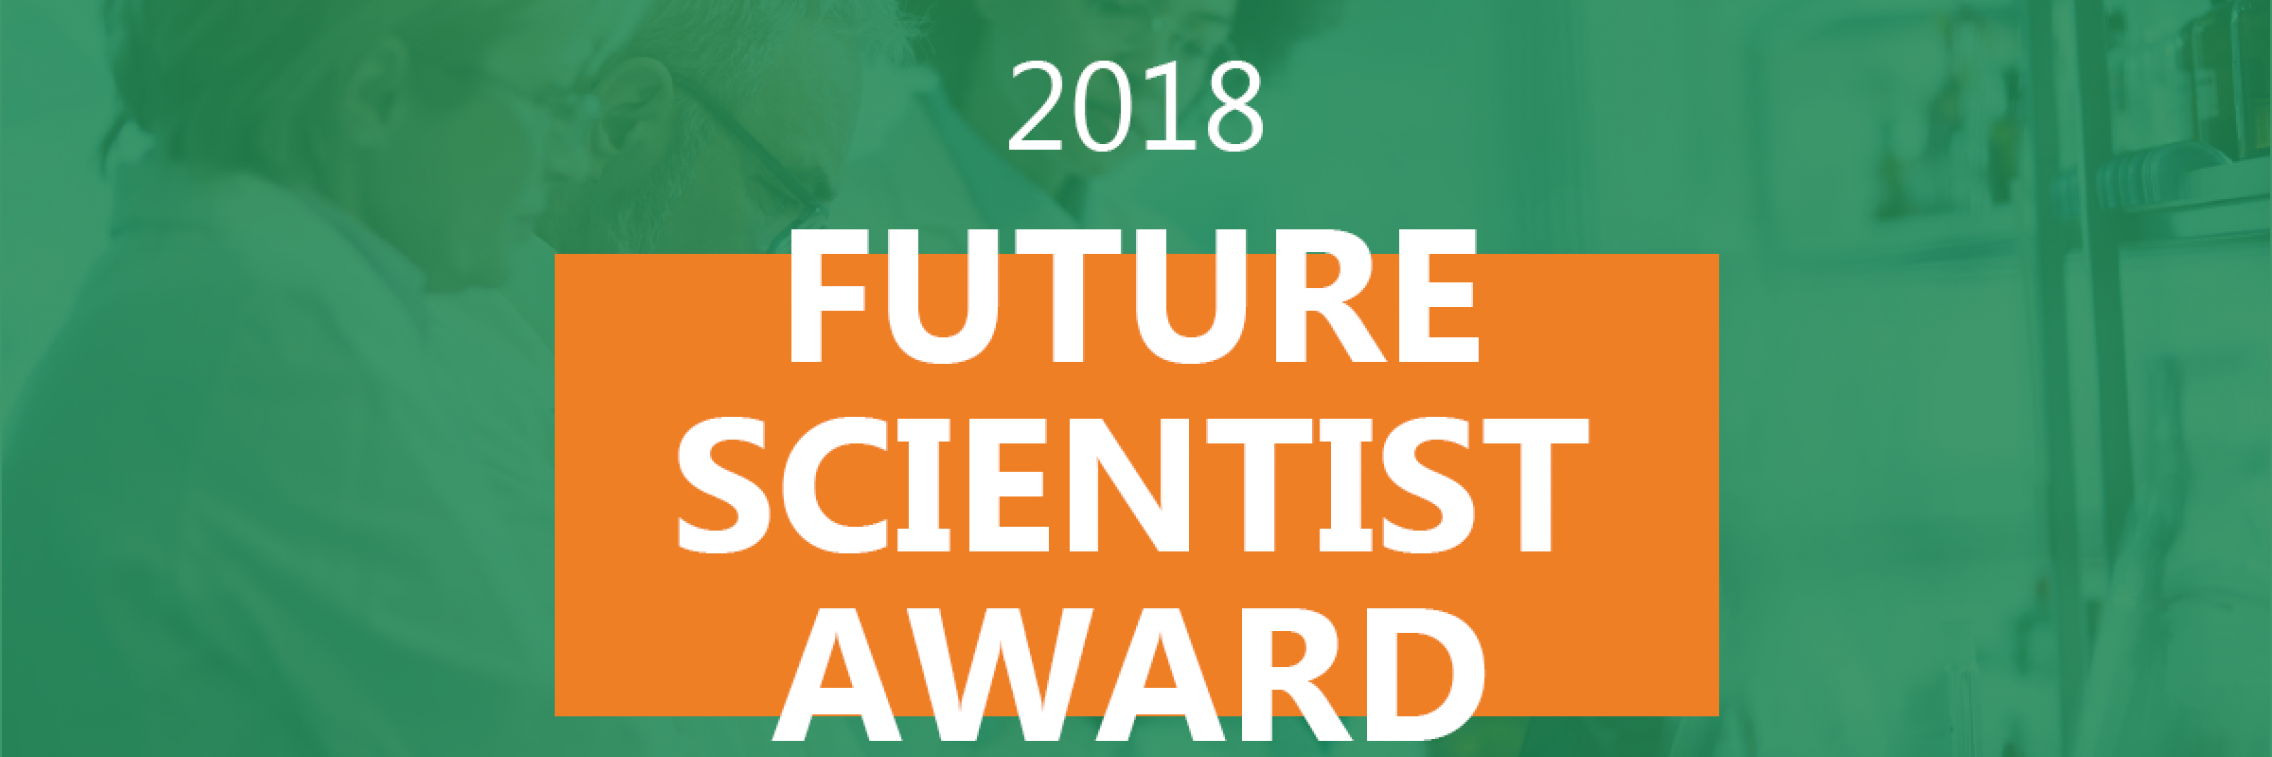 Future Scientist Award